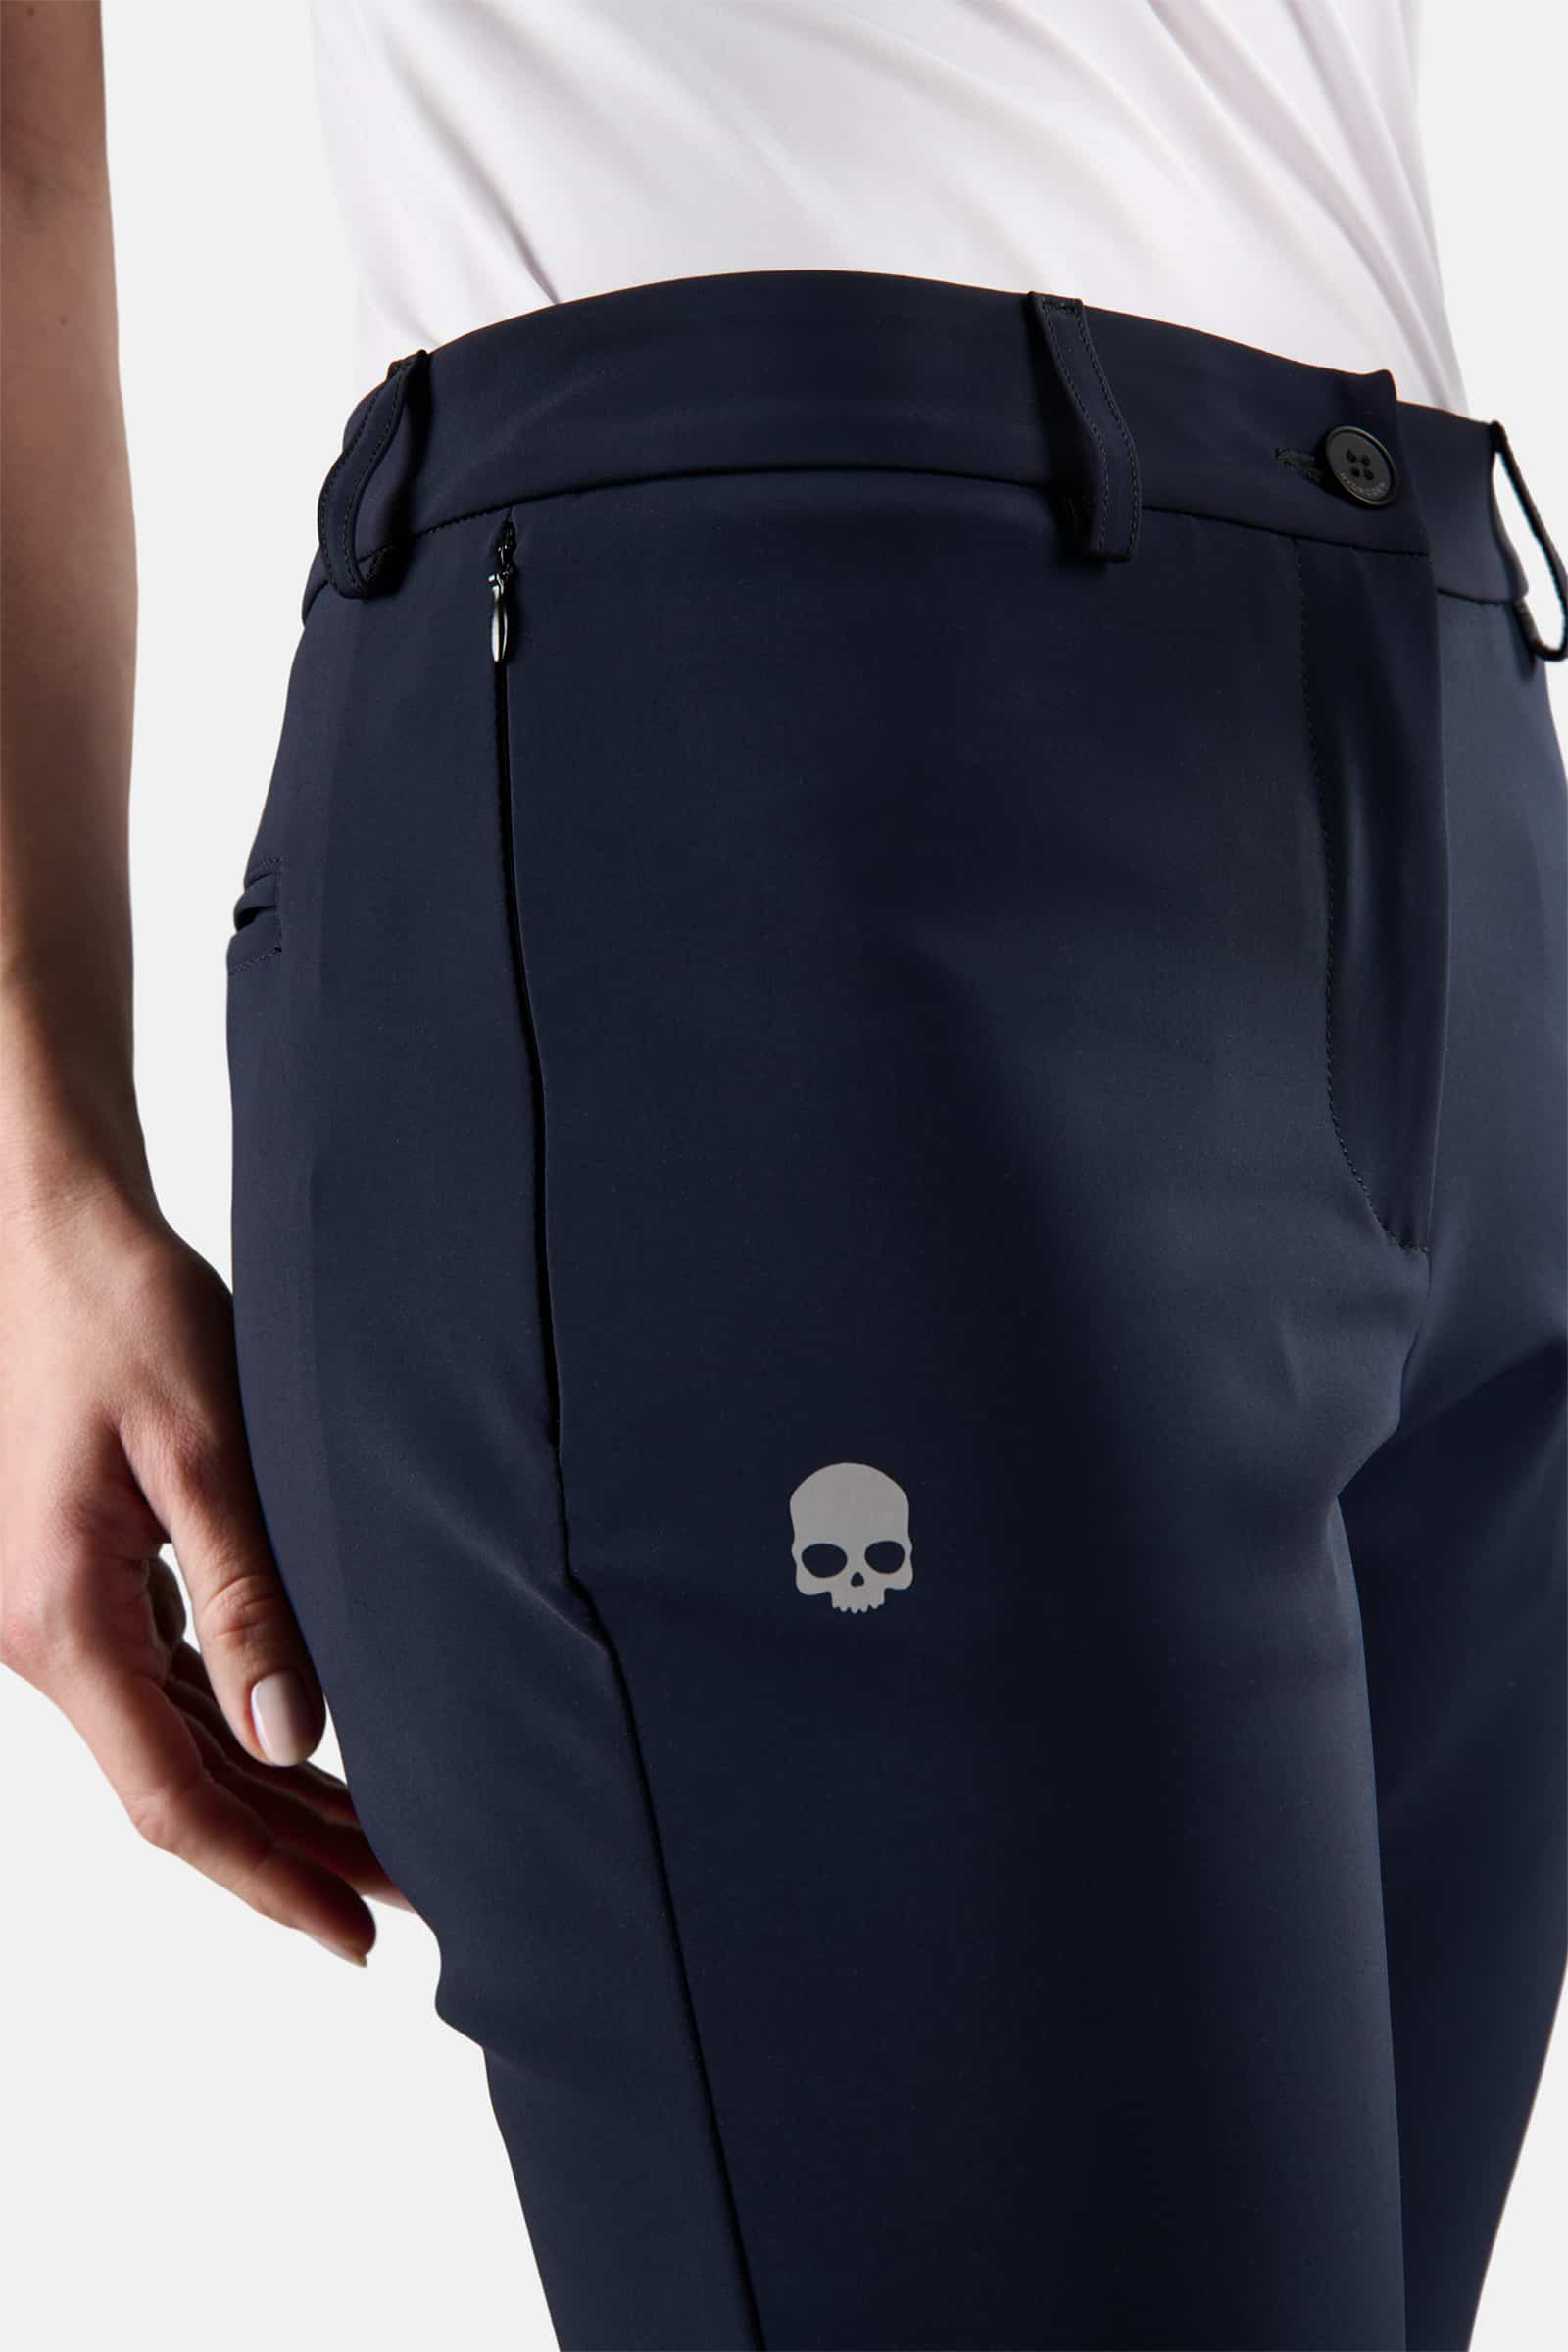 Pantaloni invernali da golf - BLUE NAVY - Abbigliamento sportivo | Hydrogen